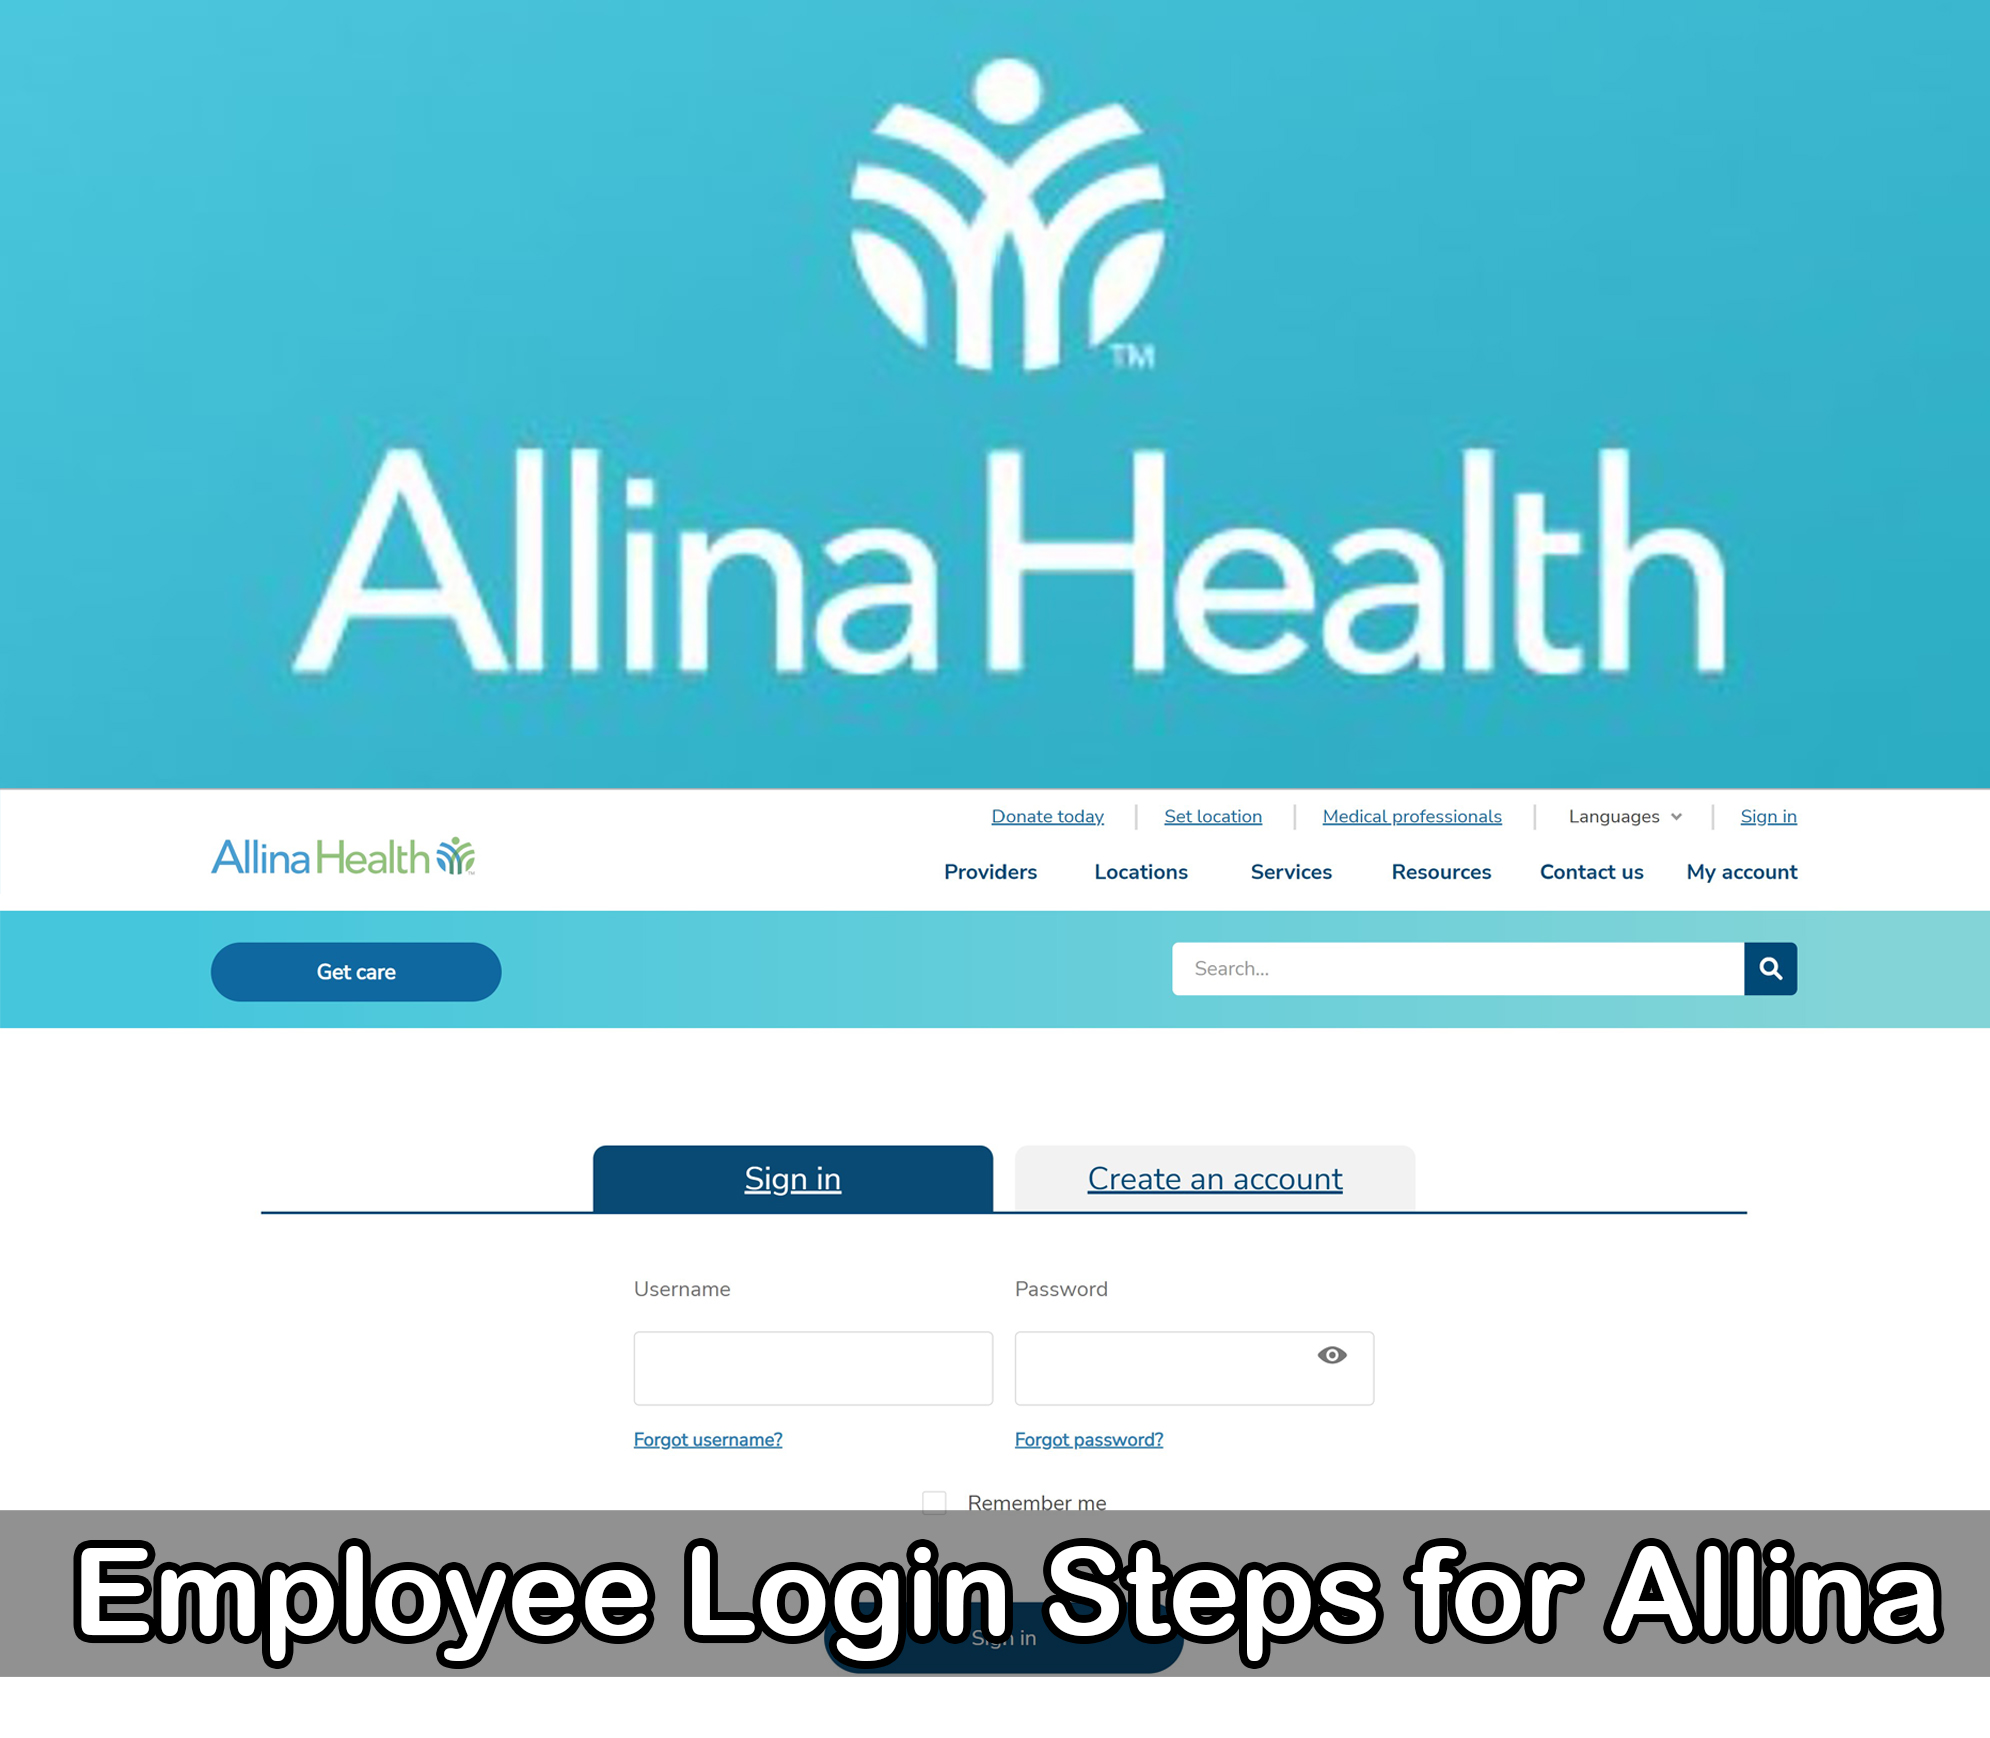 Employee Login Steps for Allina